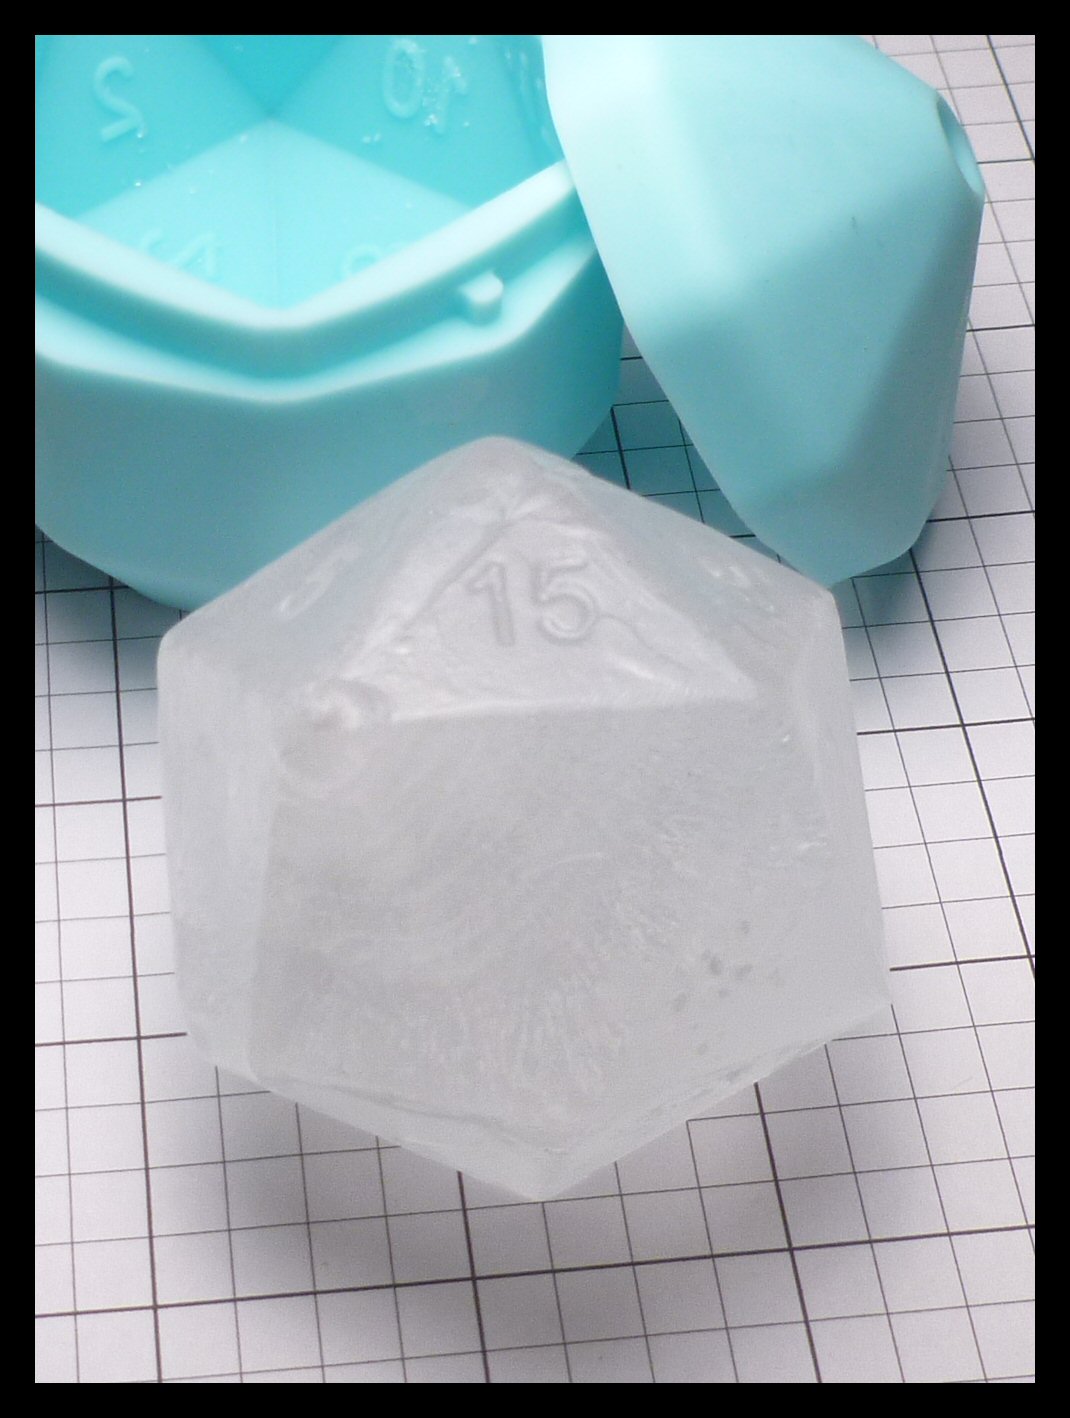 D20 Dice Ice Mold